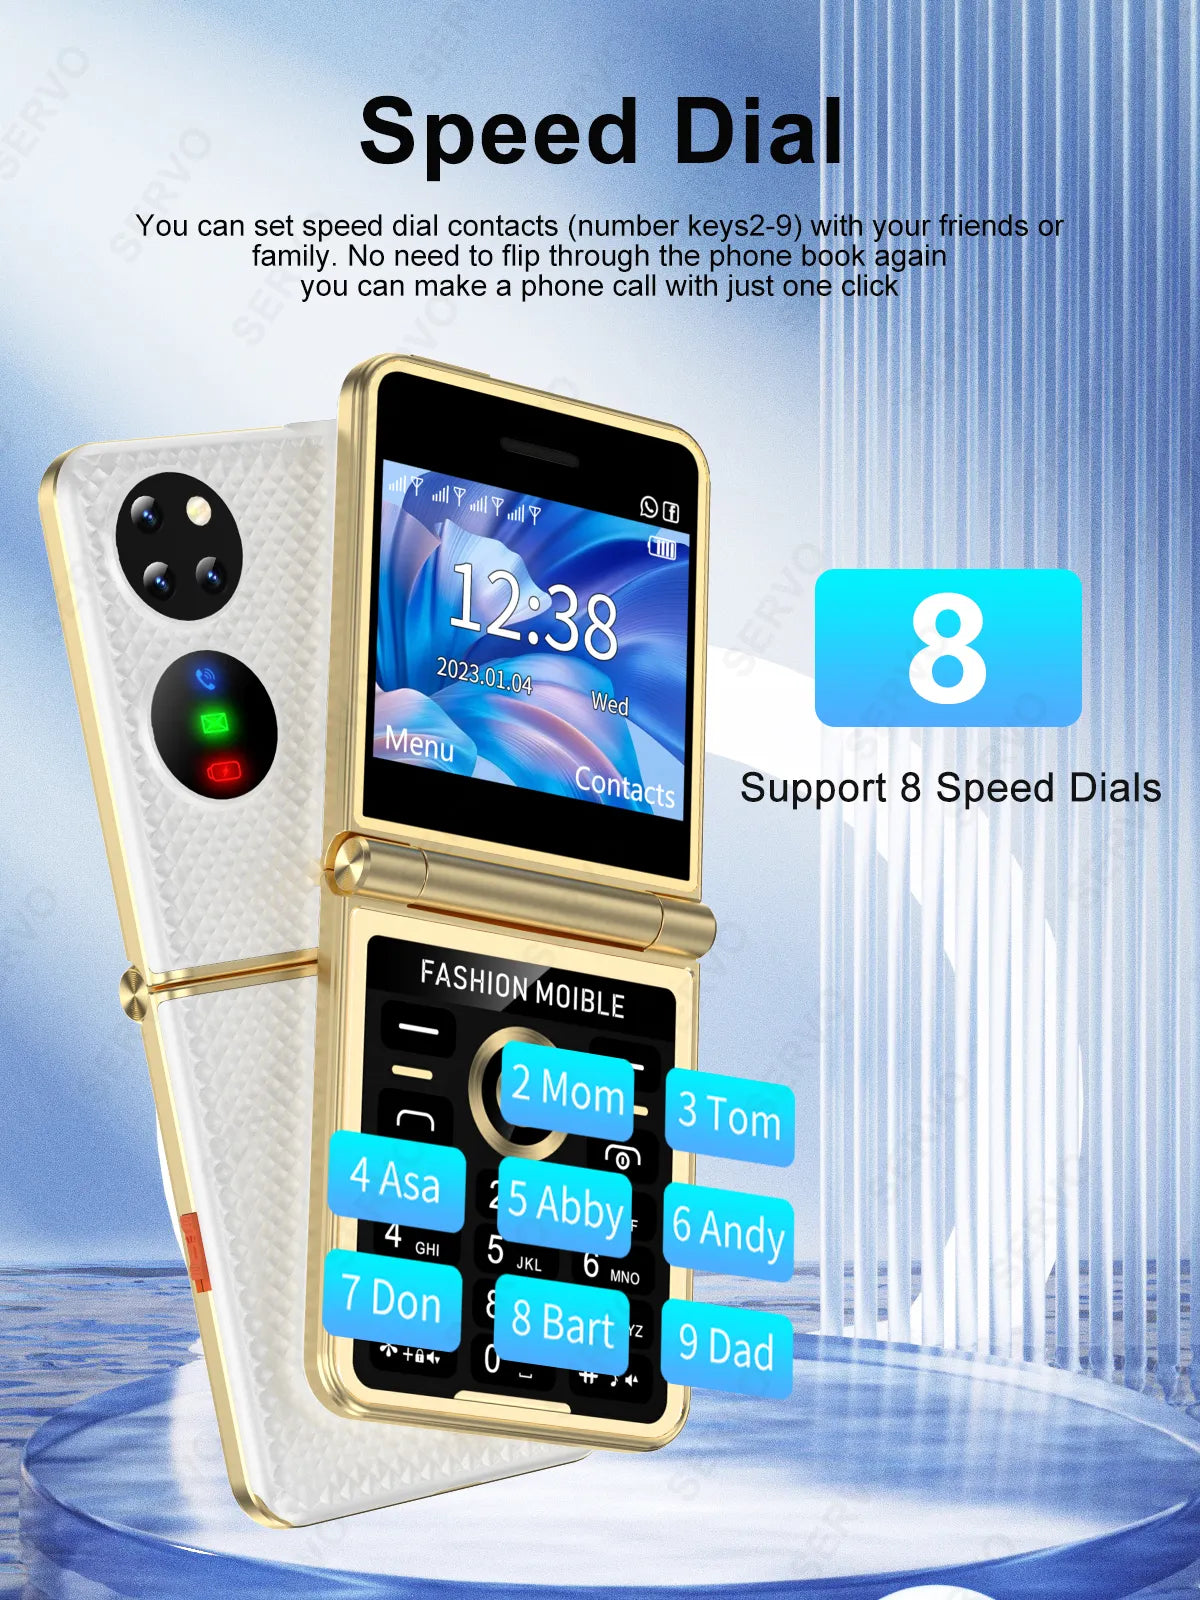 Mobile Phone 4 SIM Card 2G GSM HD Camera